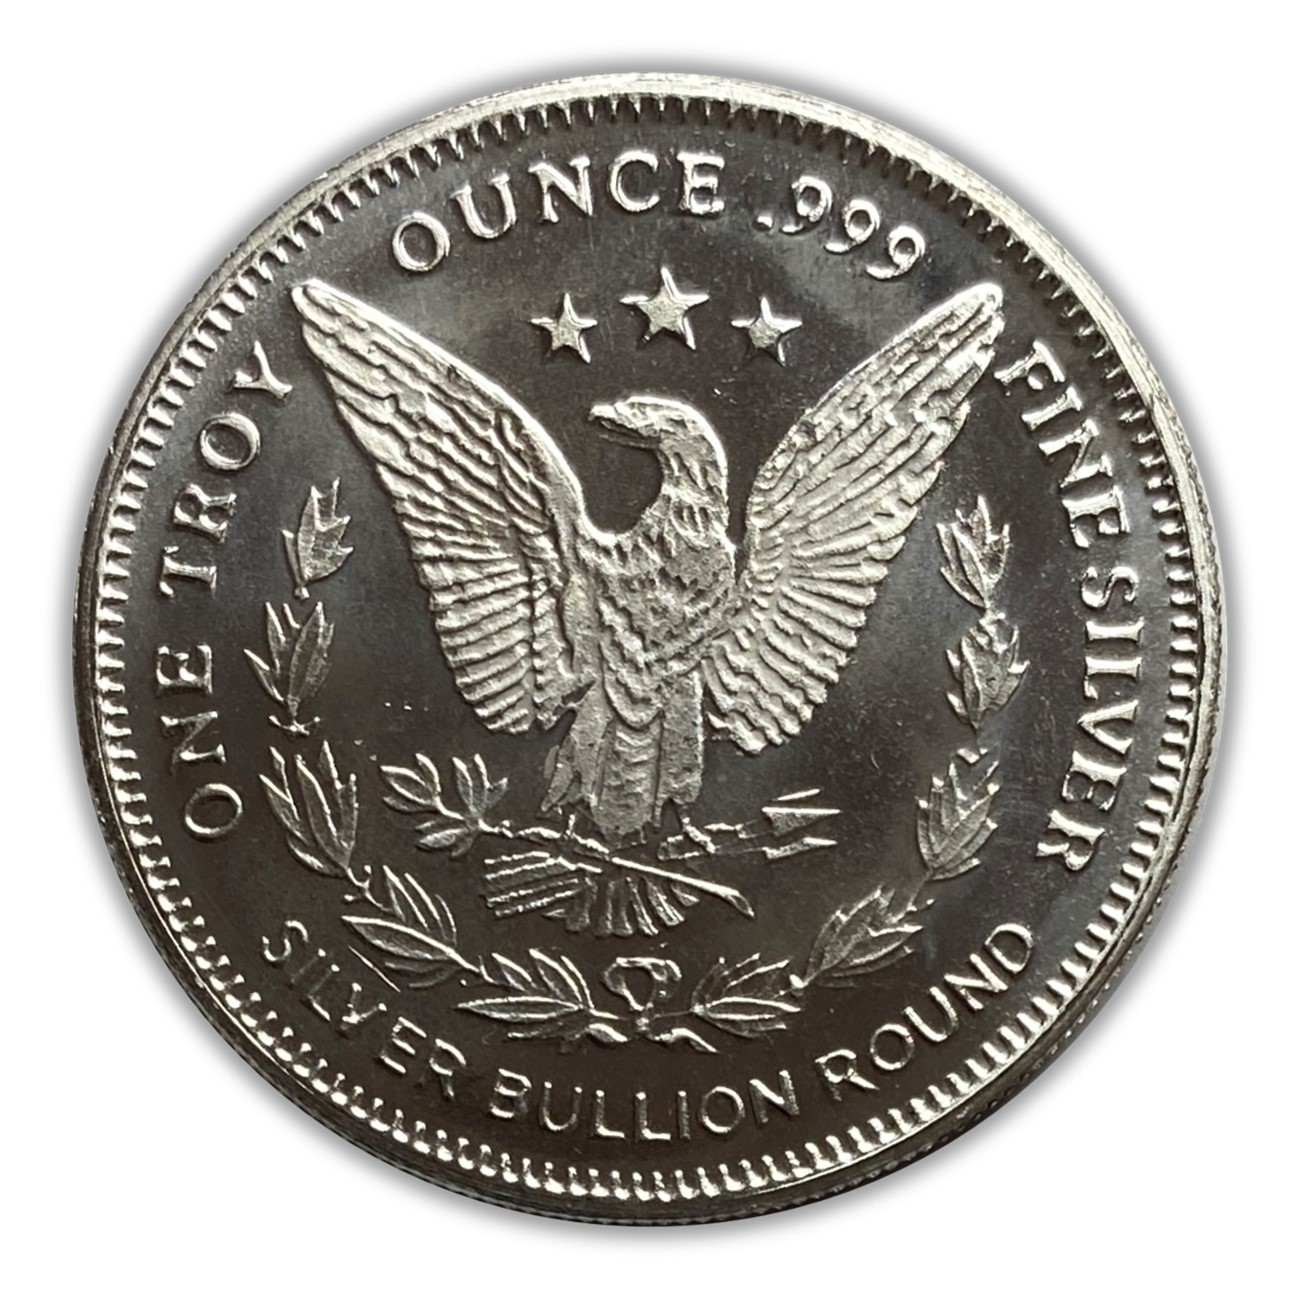 Morgan Dollar Design 1 oz Silver Round